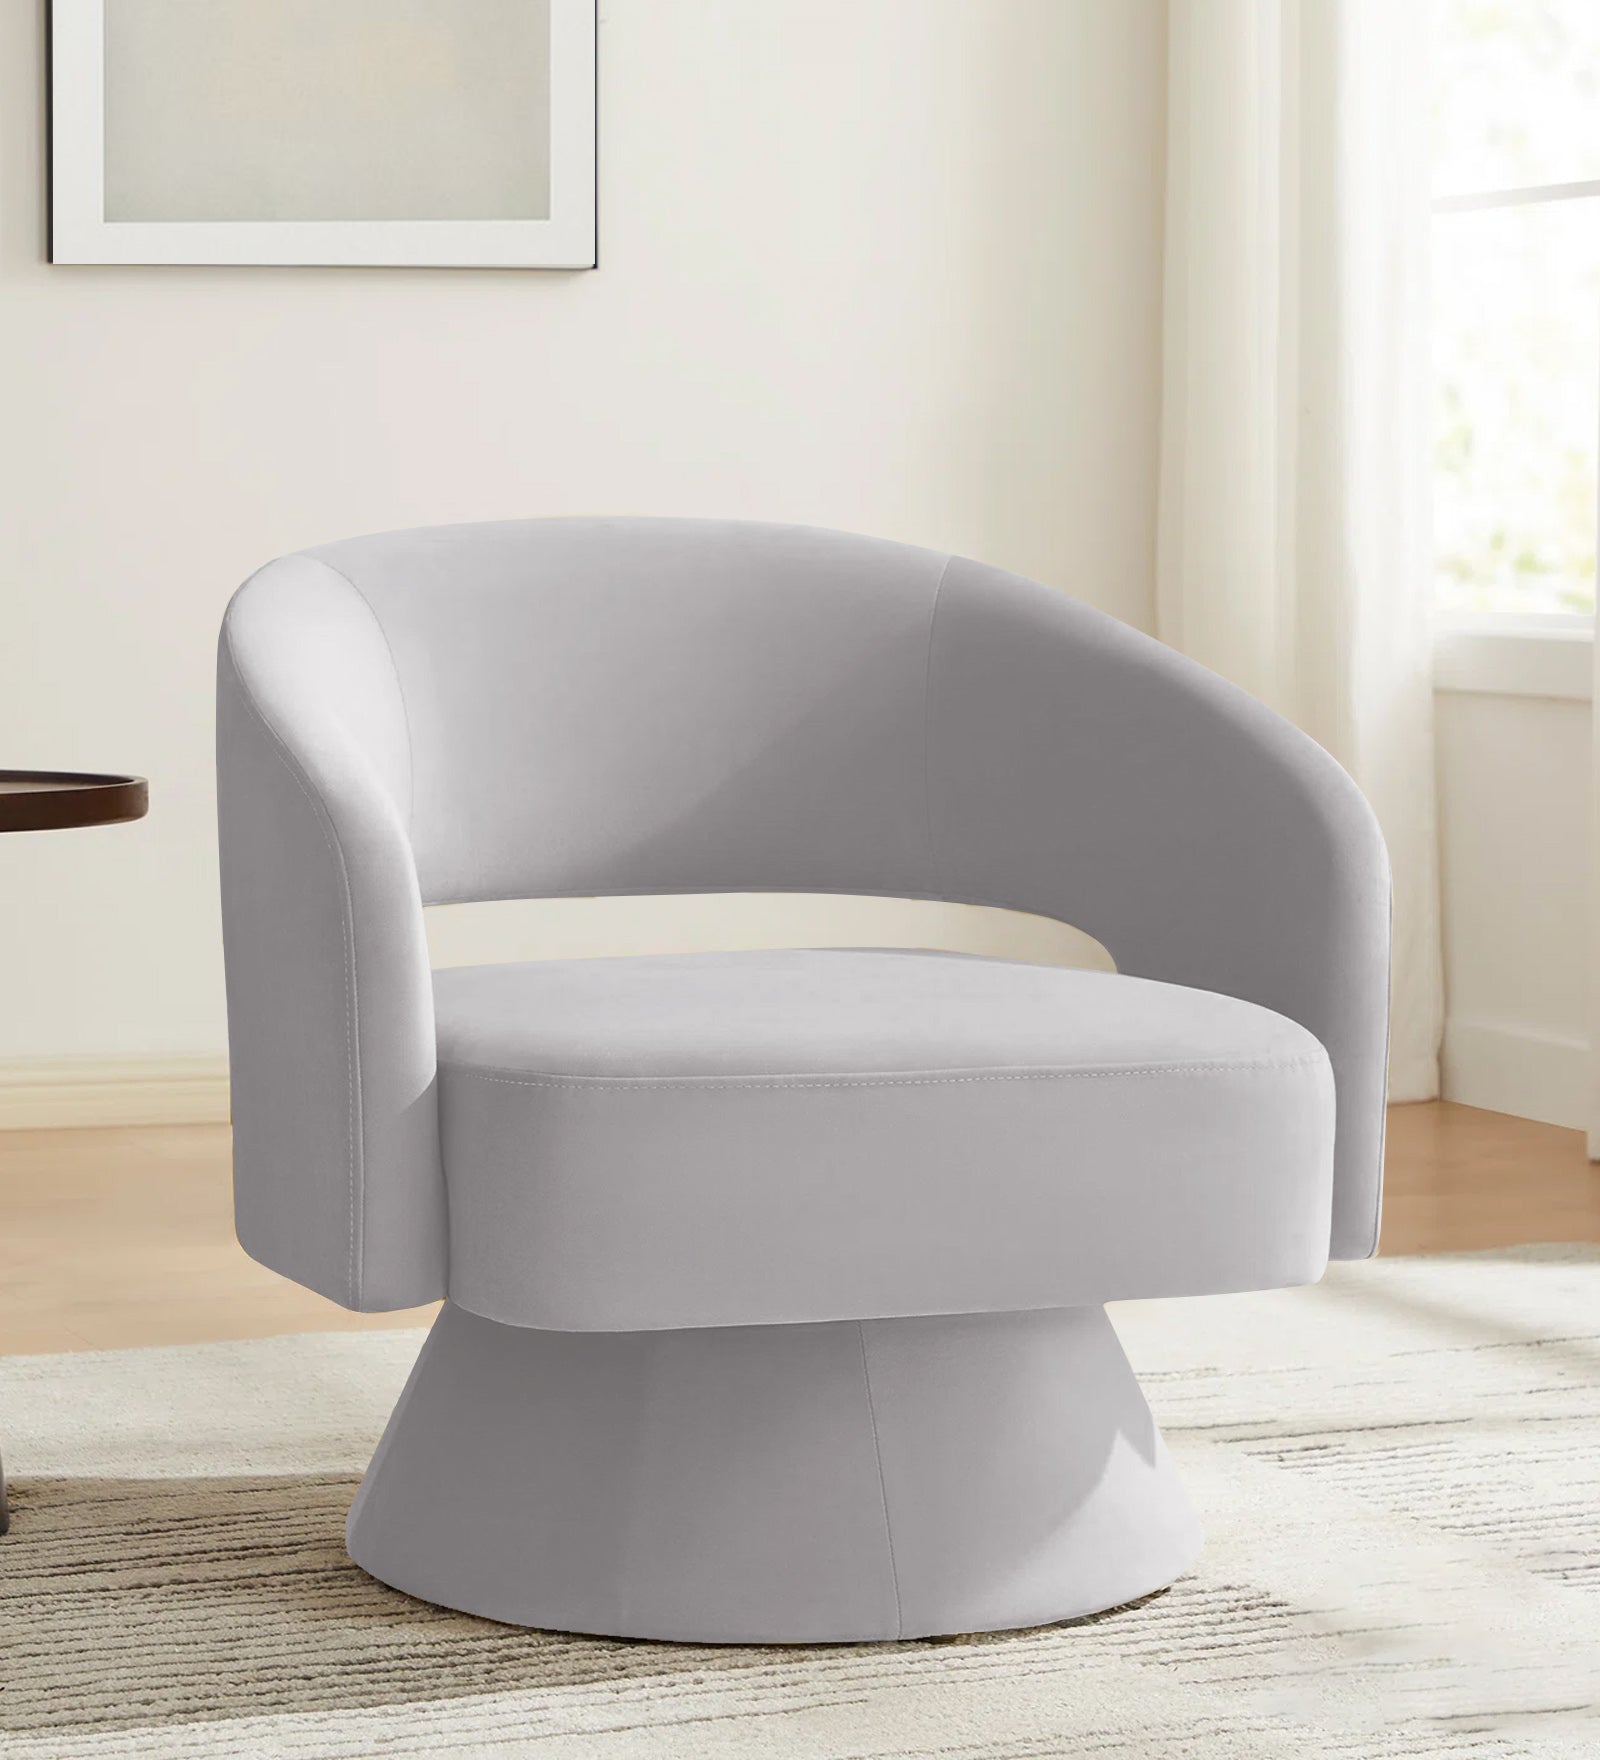 Pendra Velvet Swivel Chair in Concrete Grey Colour